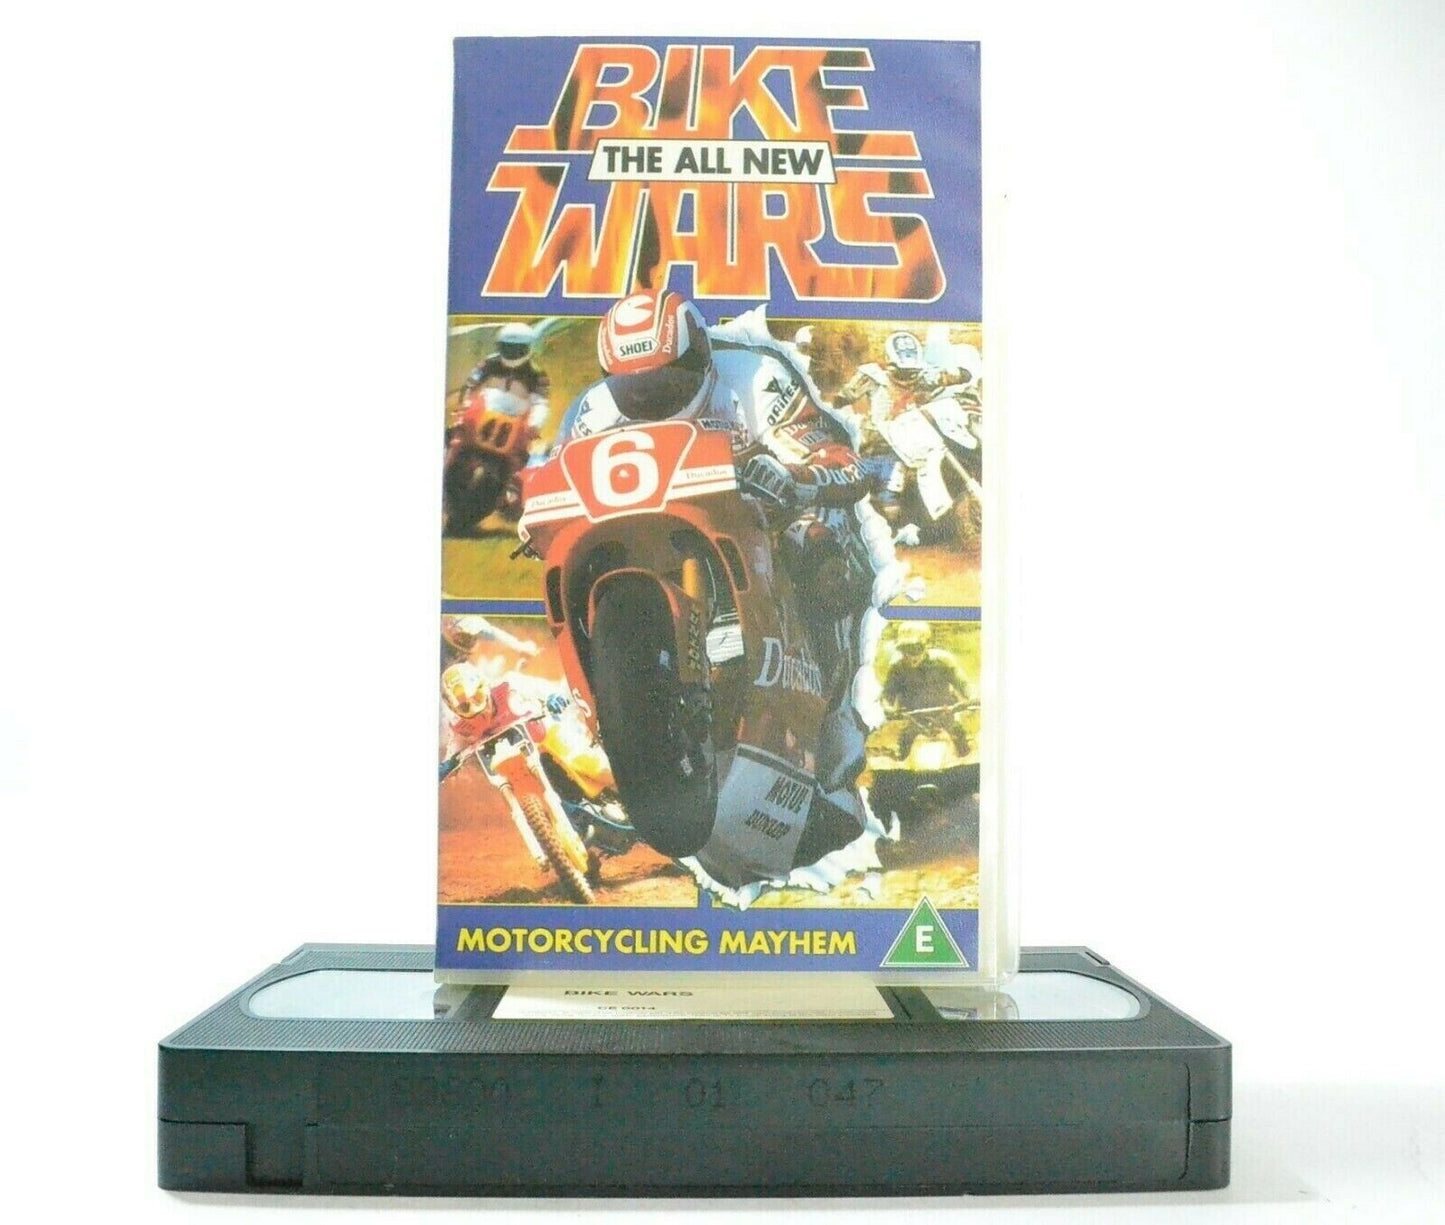 The All New Bike Wars - Motorcycling Mayhem - Superbike Challenge - Pal VHS-